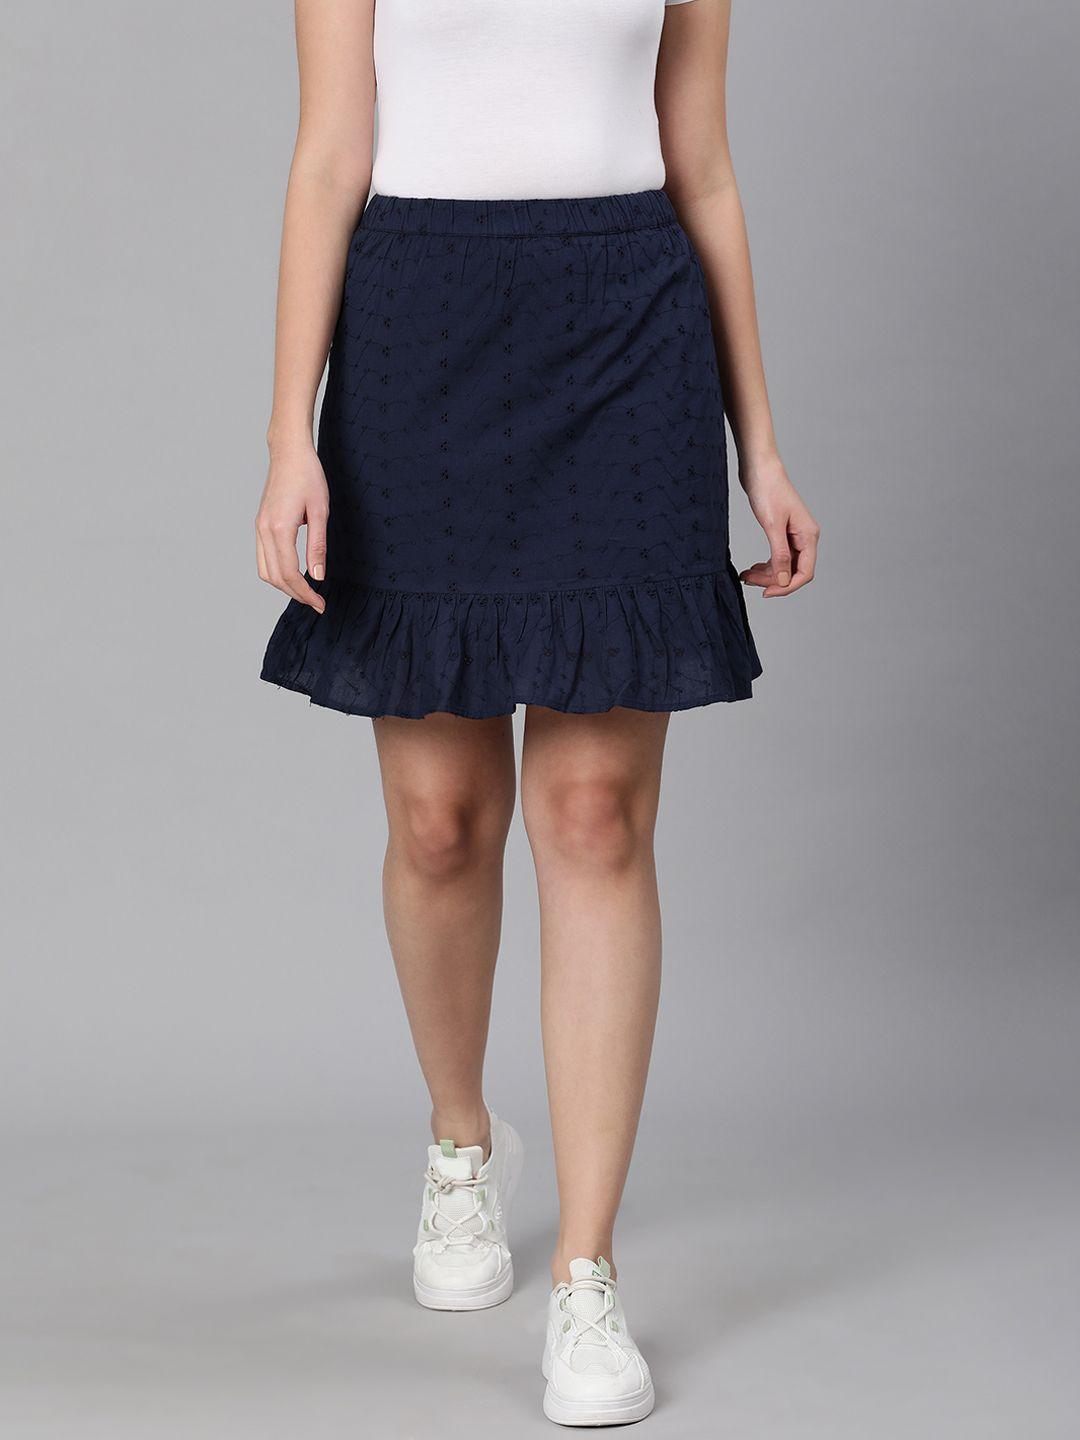 Oxolloxo Women Navy Blue Schiffy Flared Skirt